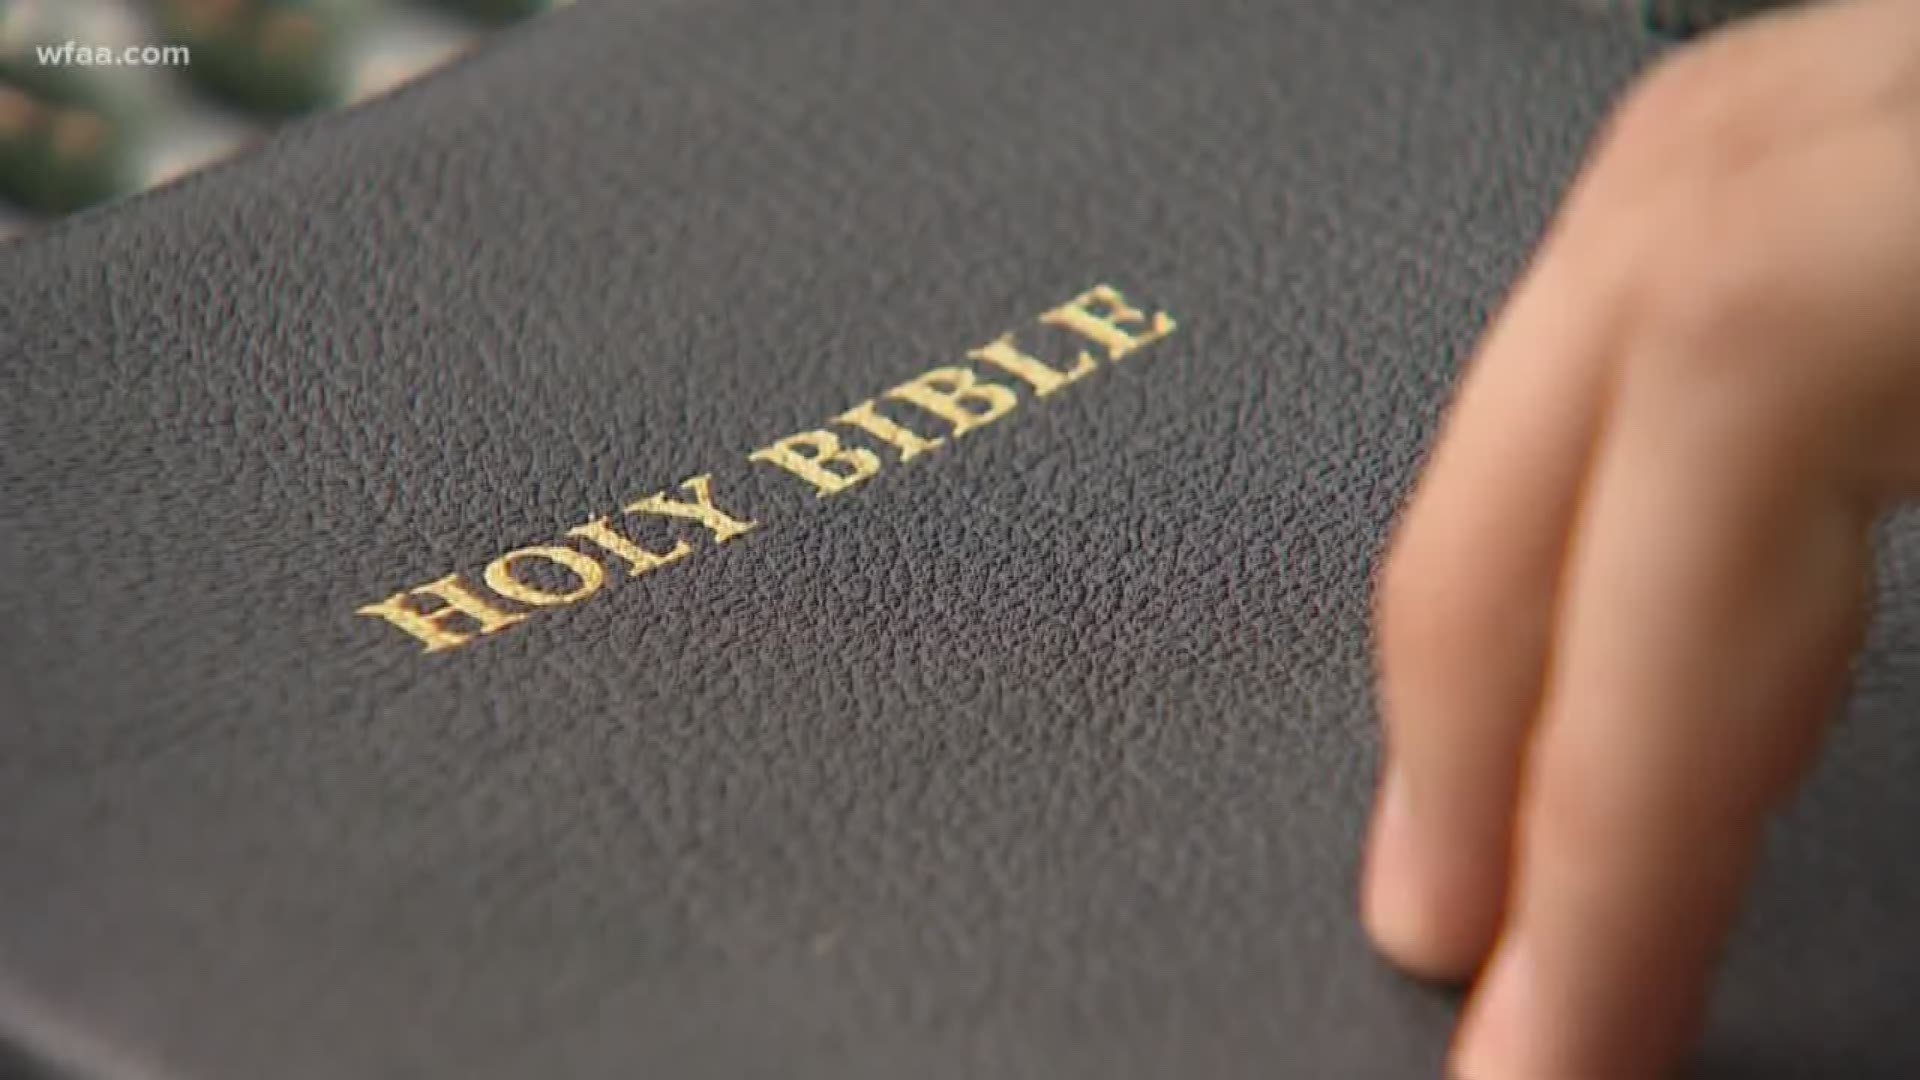 Power of social media brings Bible back home